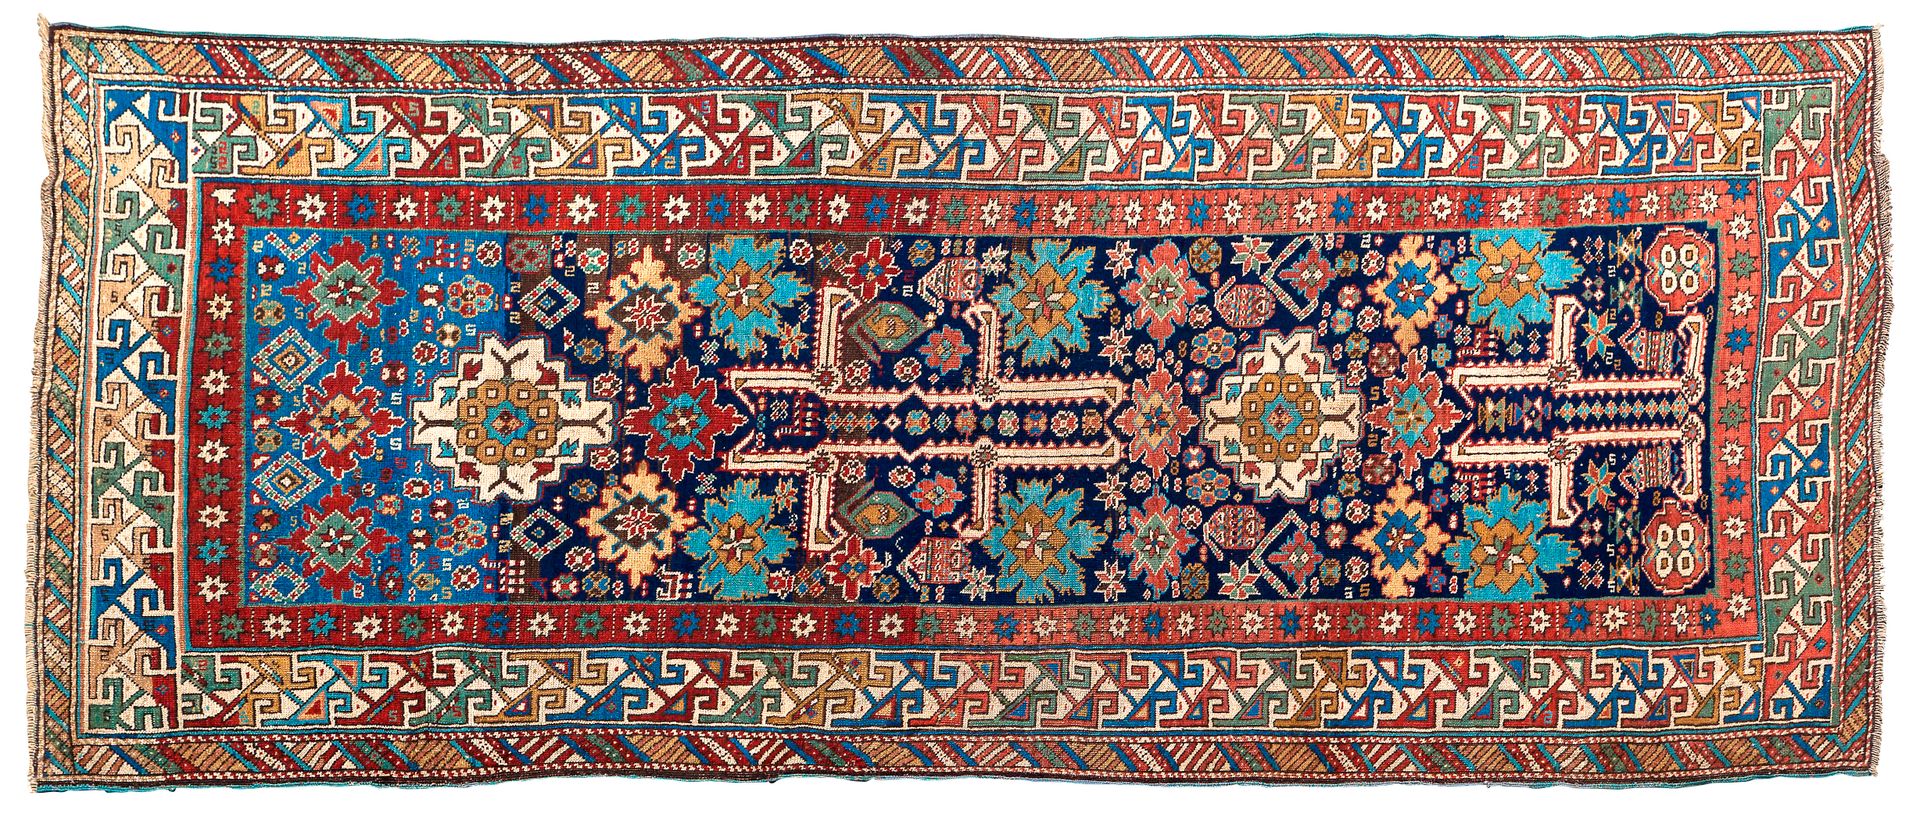 Null Tapis KOUBA (Caucase), fin du 19e siècle

Dimensions : 250 x 115cm.

Caract&hellip;